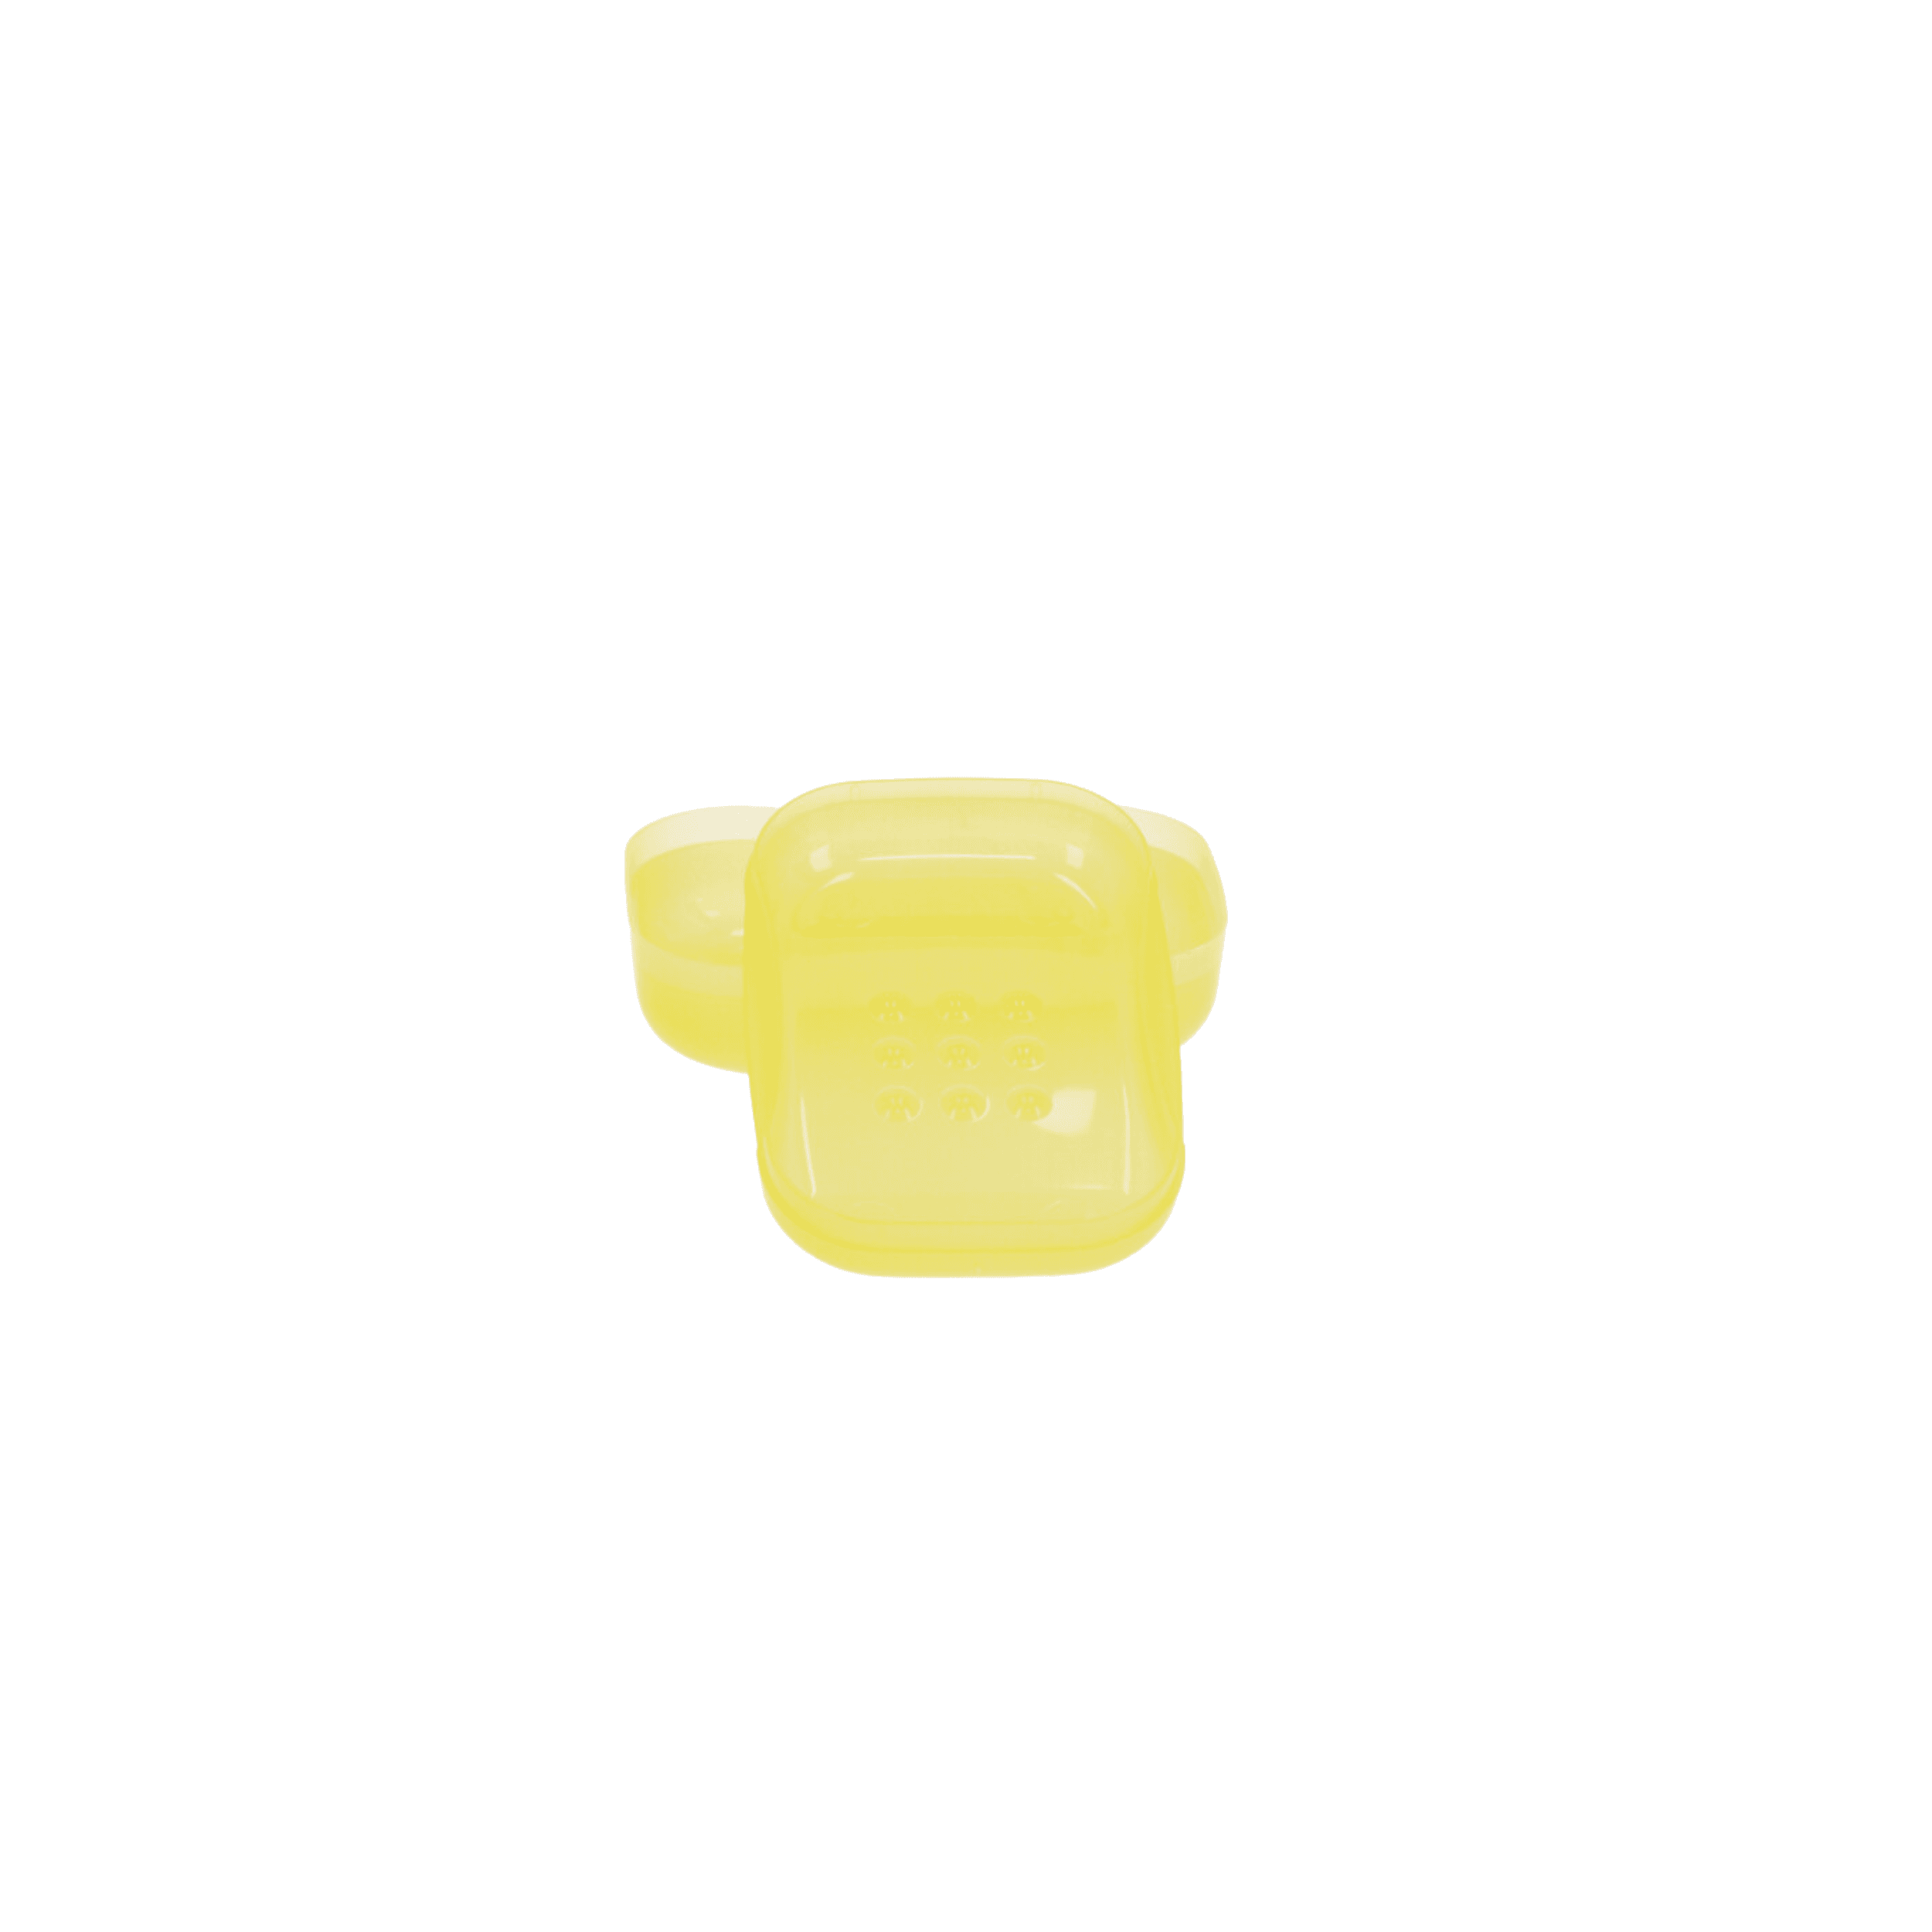 Tourist soap dish, closed plastic soap dish, type III - yellow